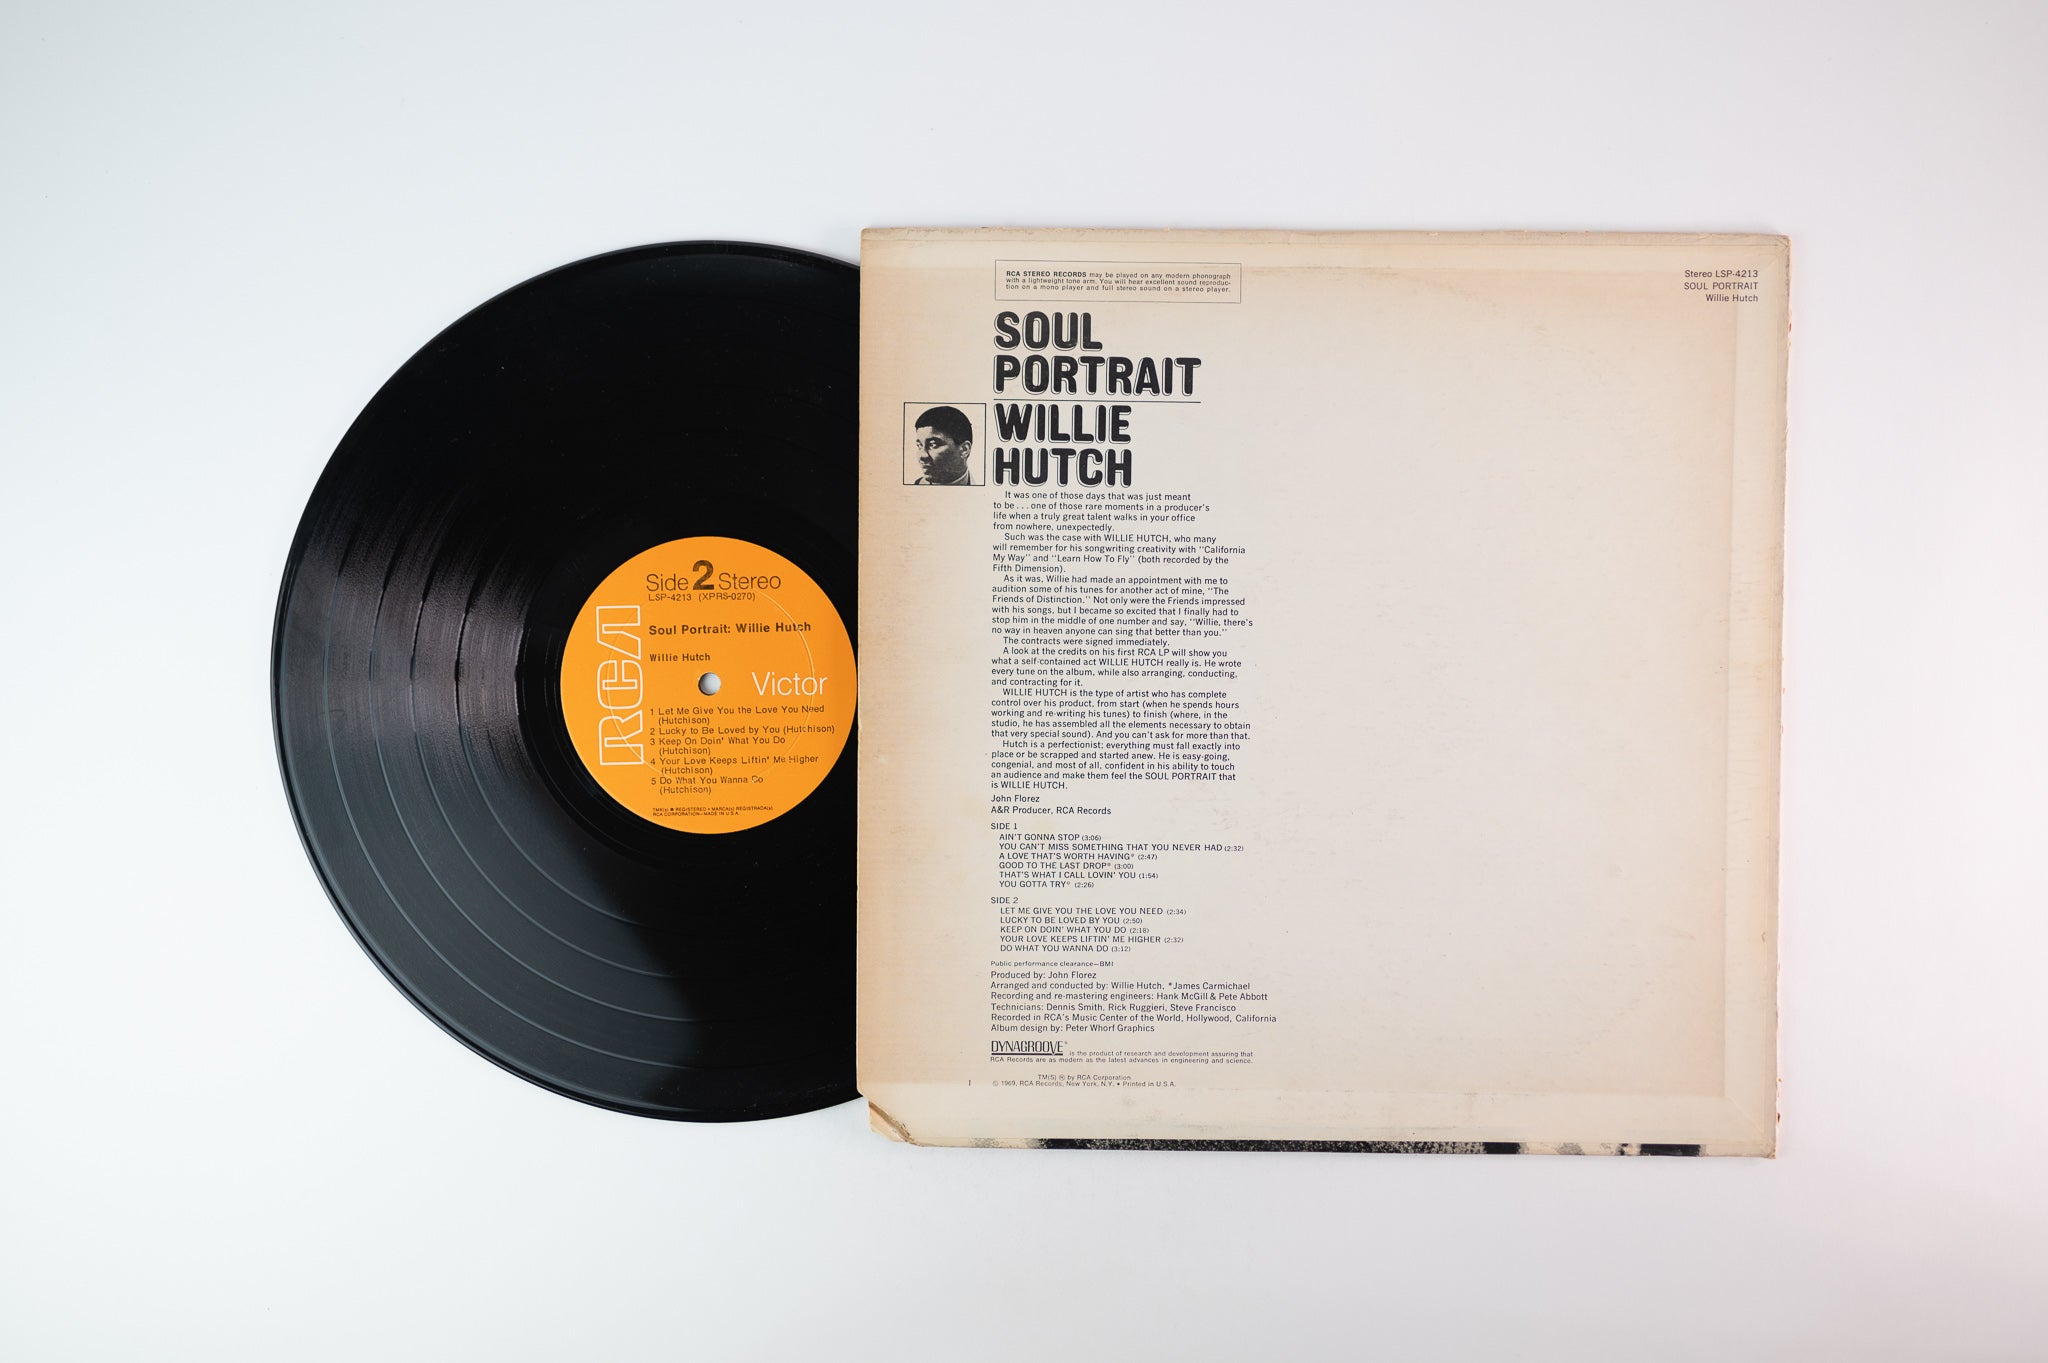 Willie Hutch - Soul Portrait on RCA